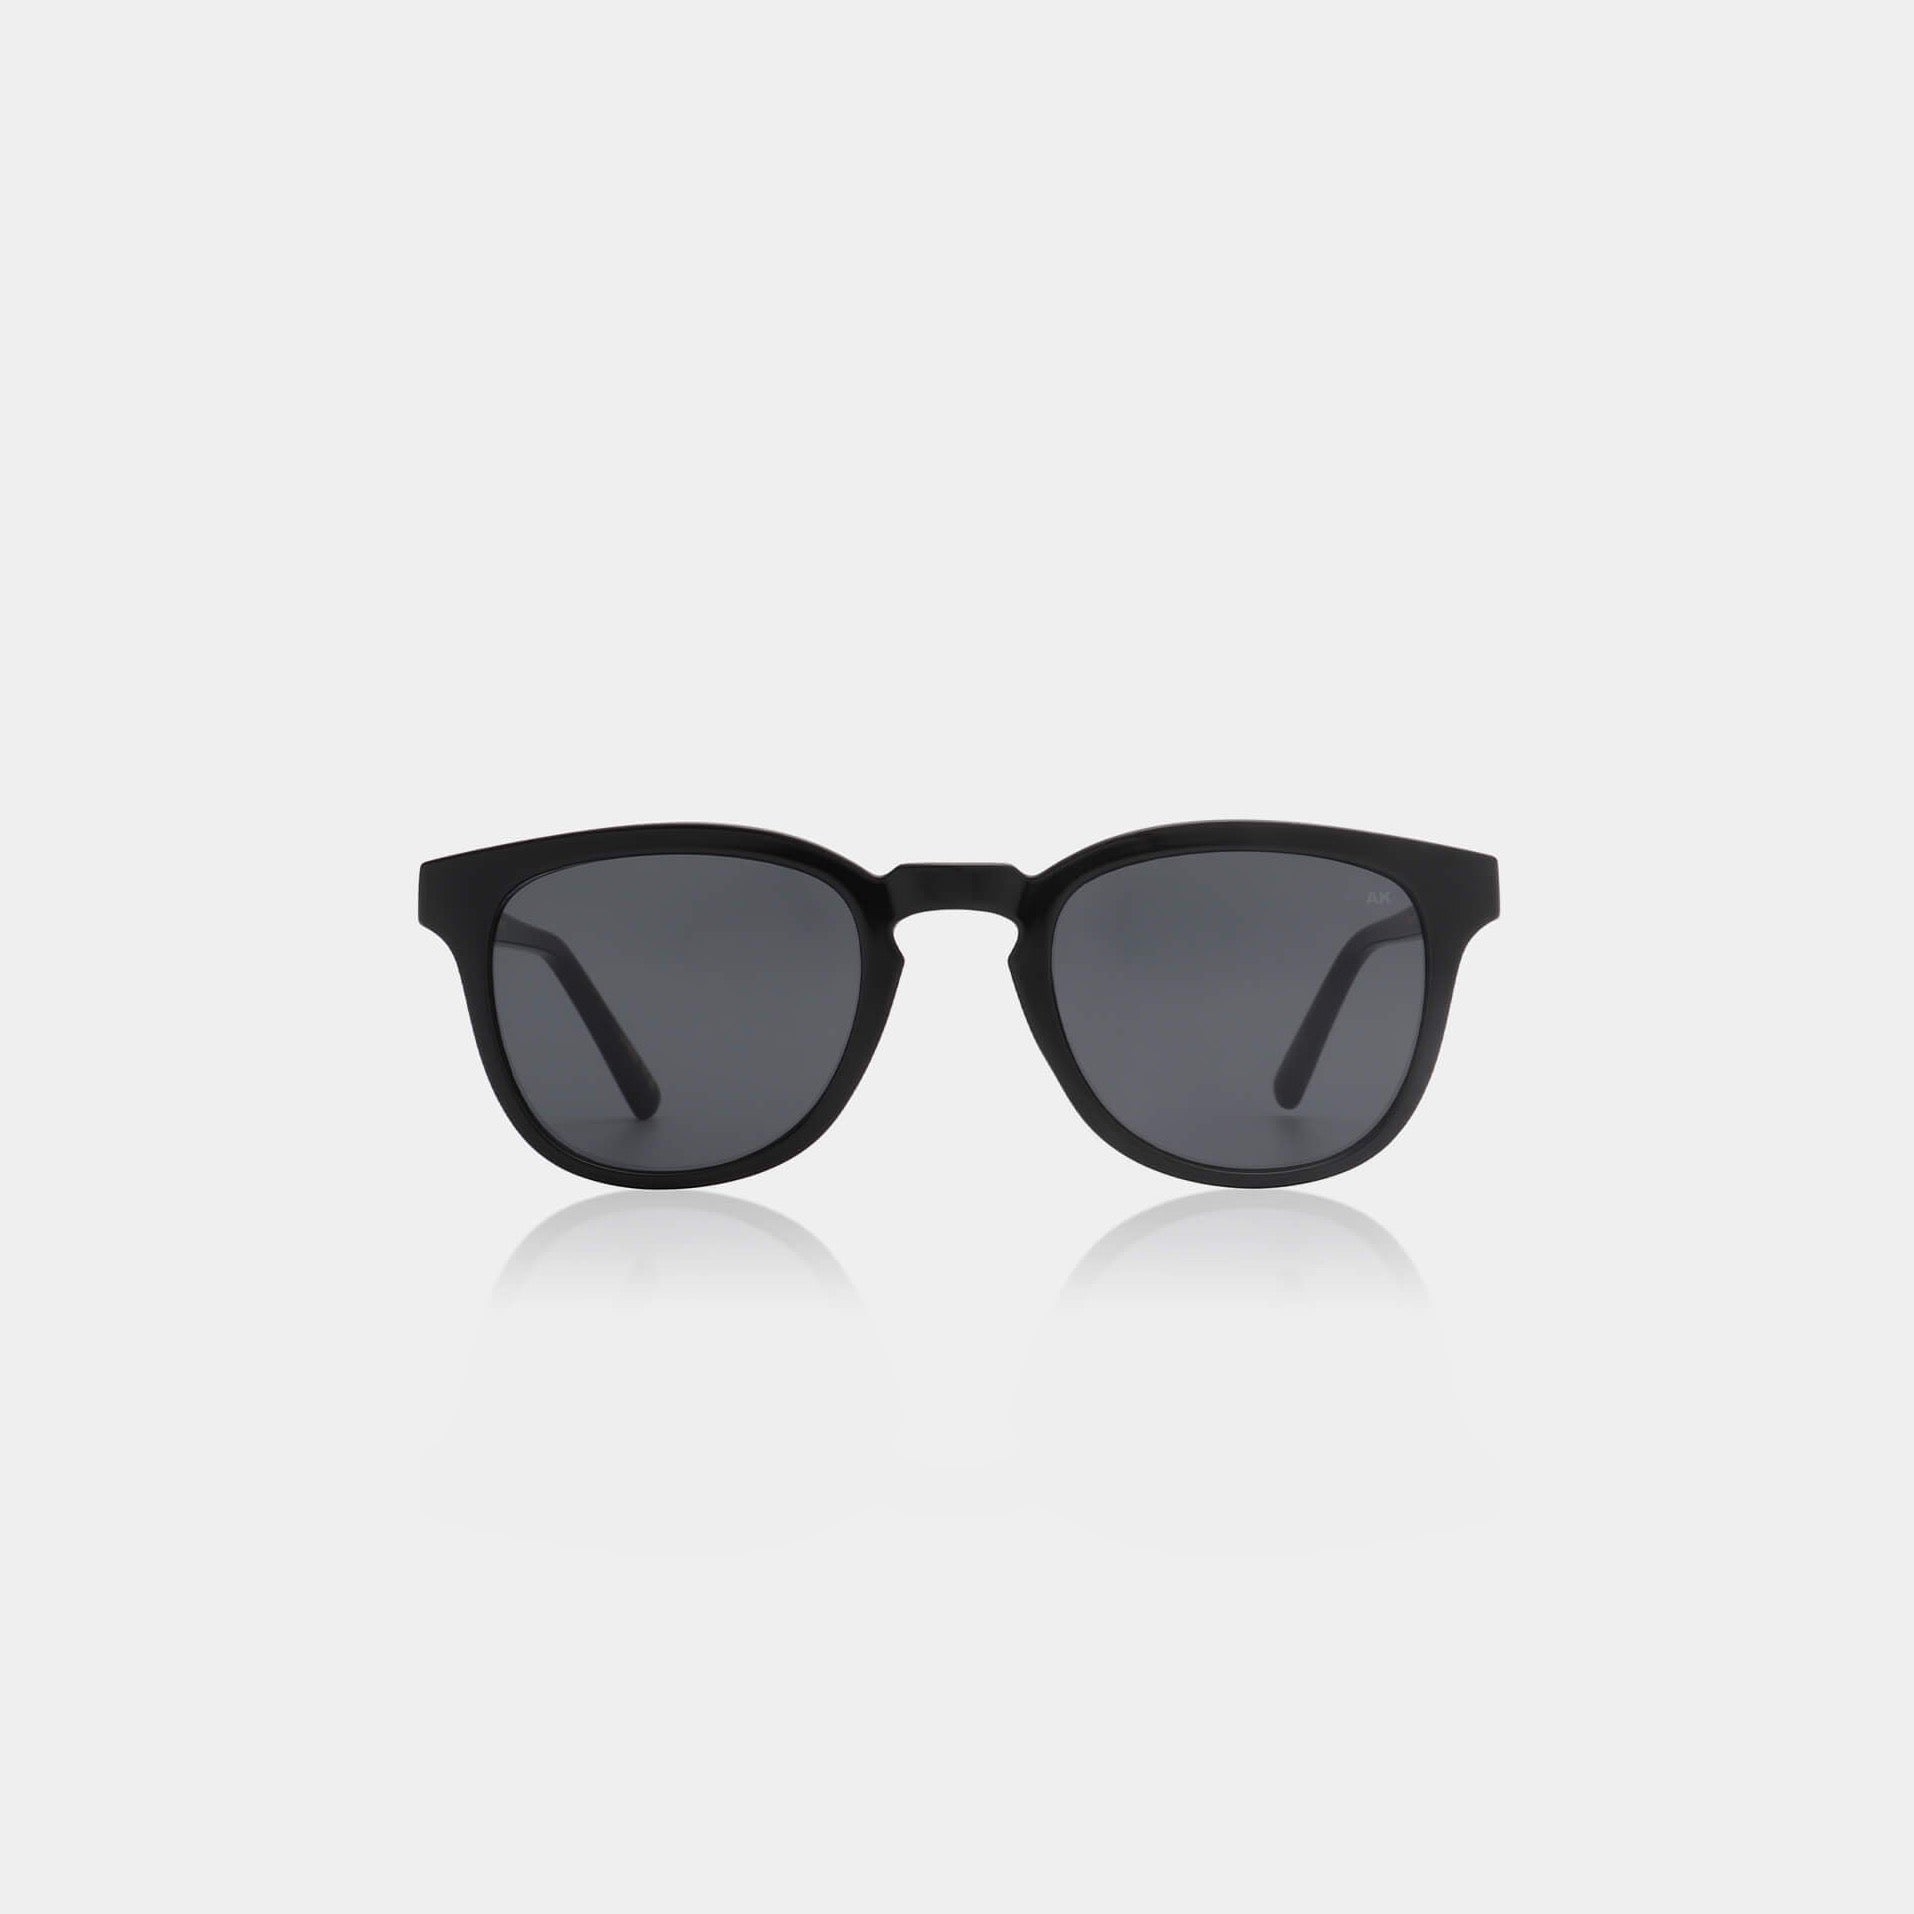 Bate sunglasses - Black - HAYGEN